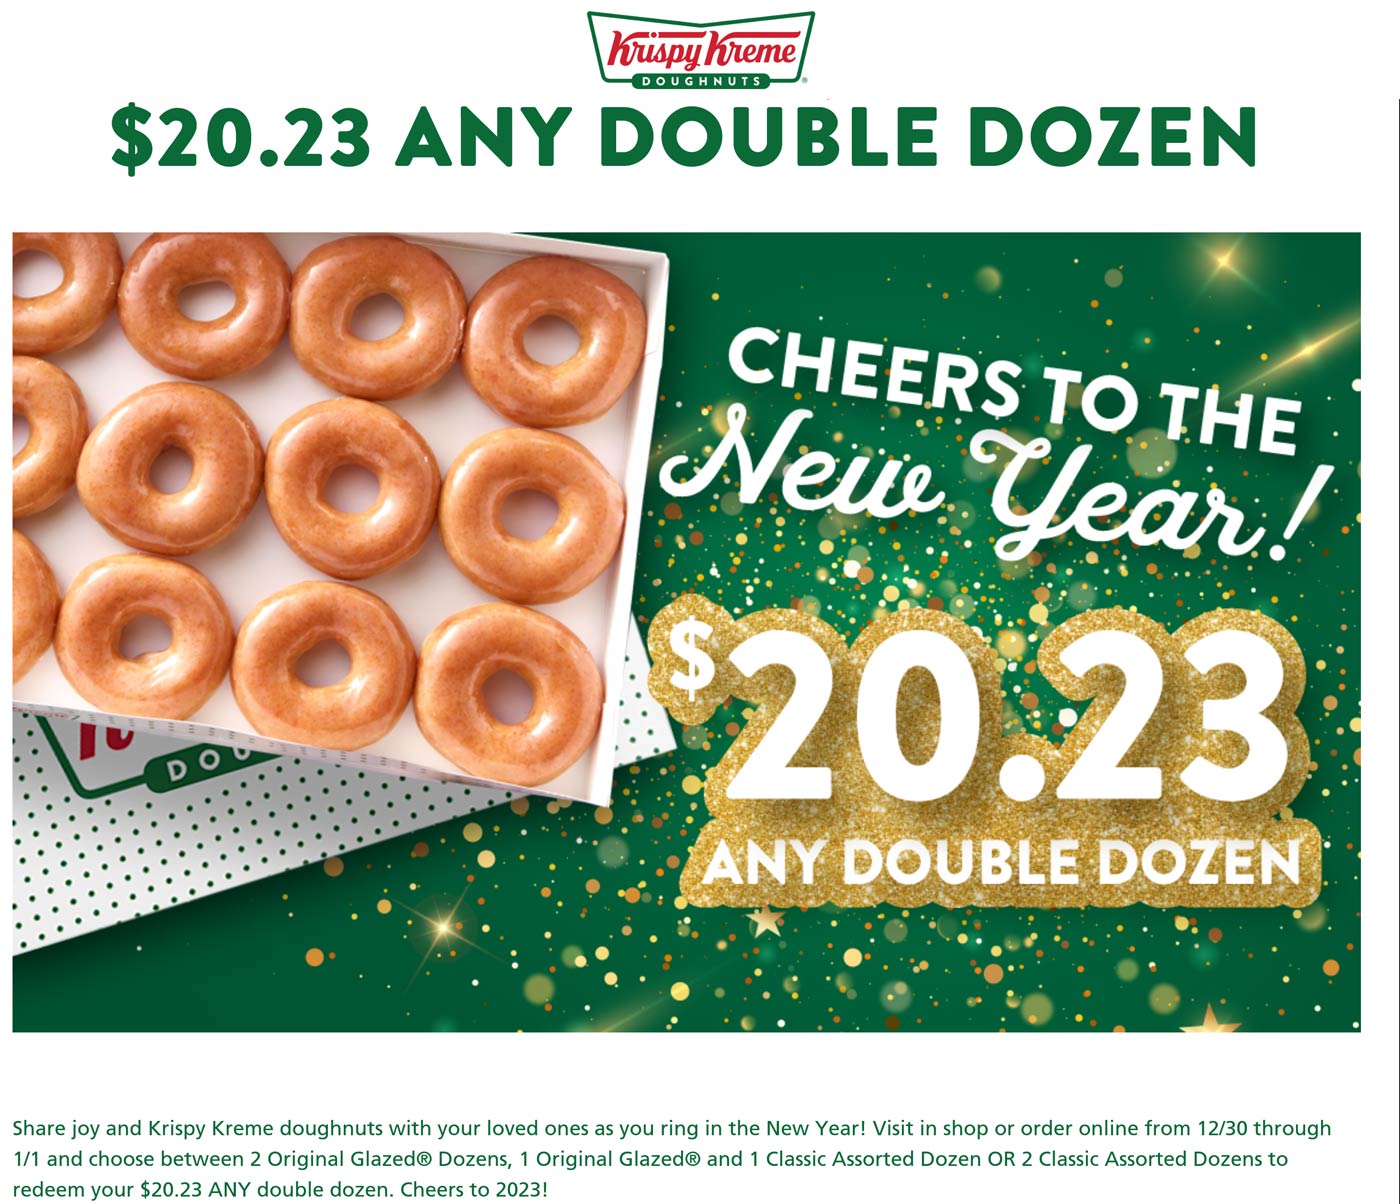 Krispy Kreme restaurants Coupon  Double dozen glazed doughnuts = $20.23 at Krispy Kreme #krispykreme 